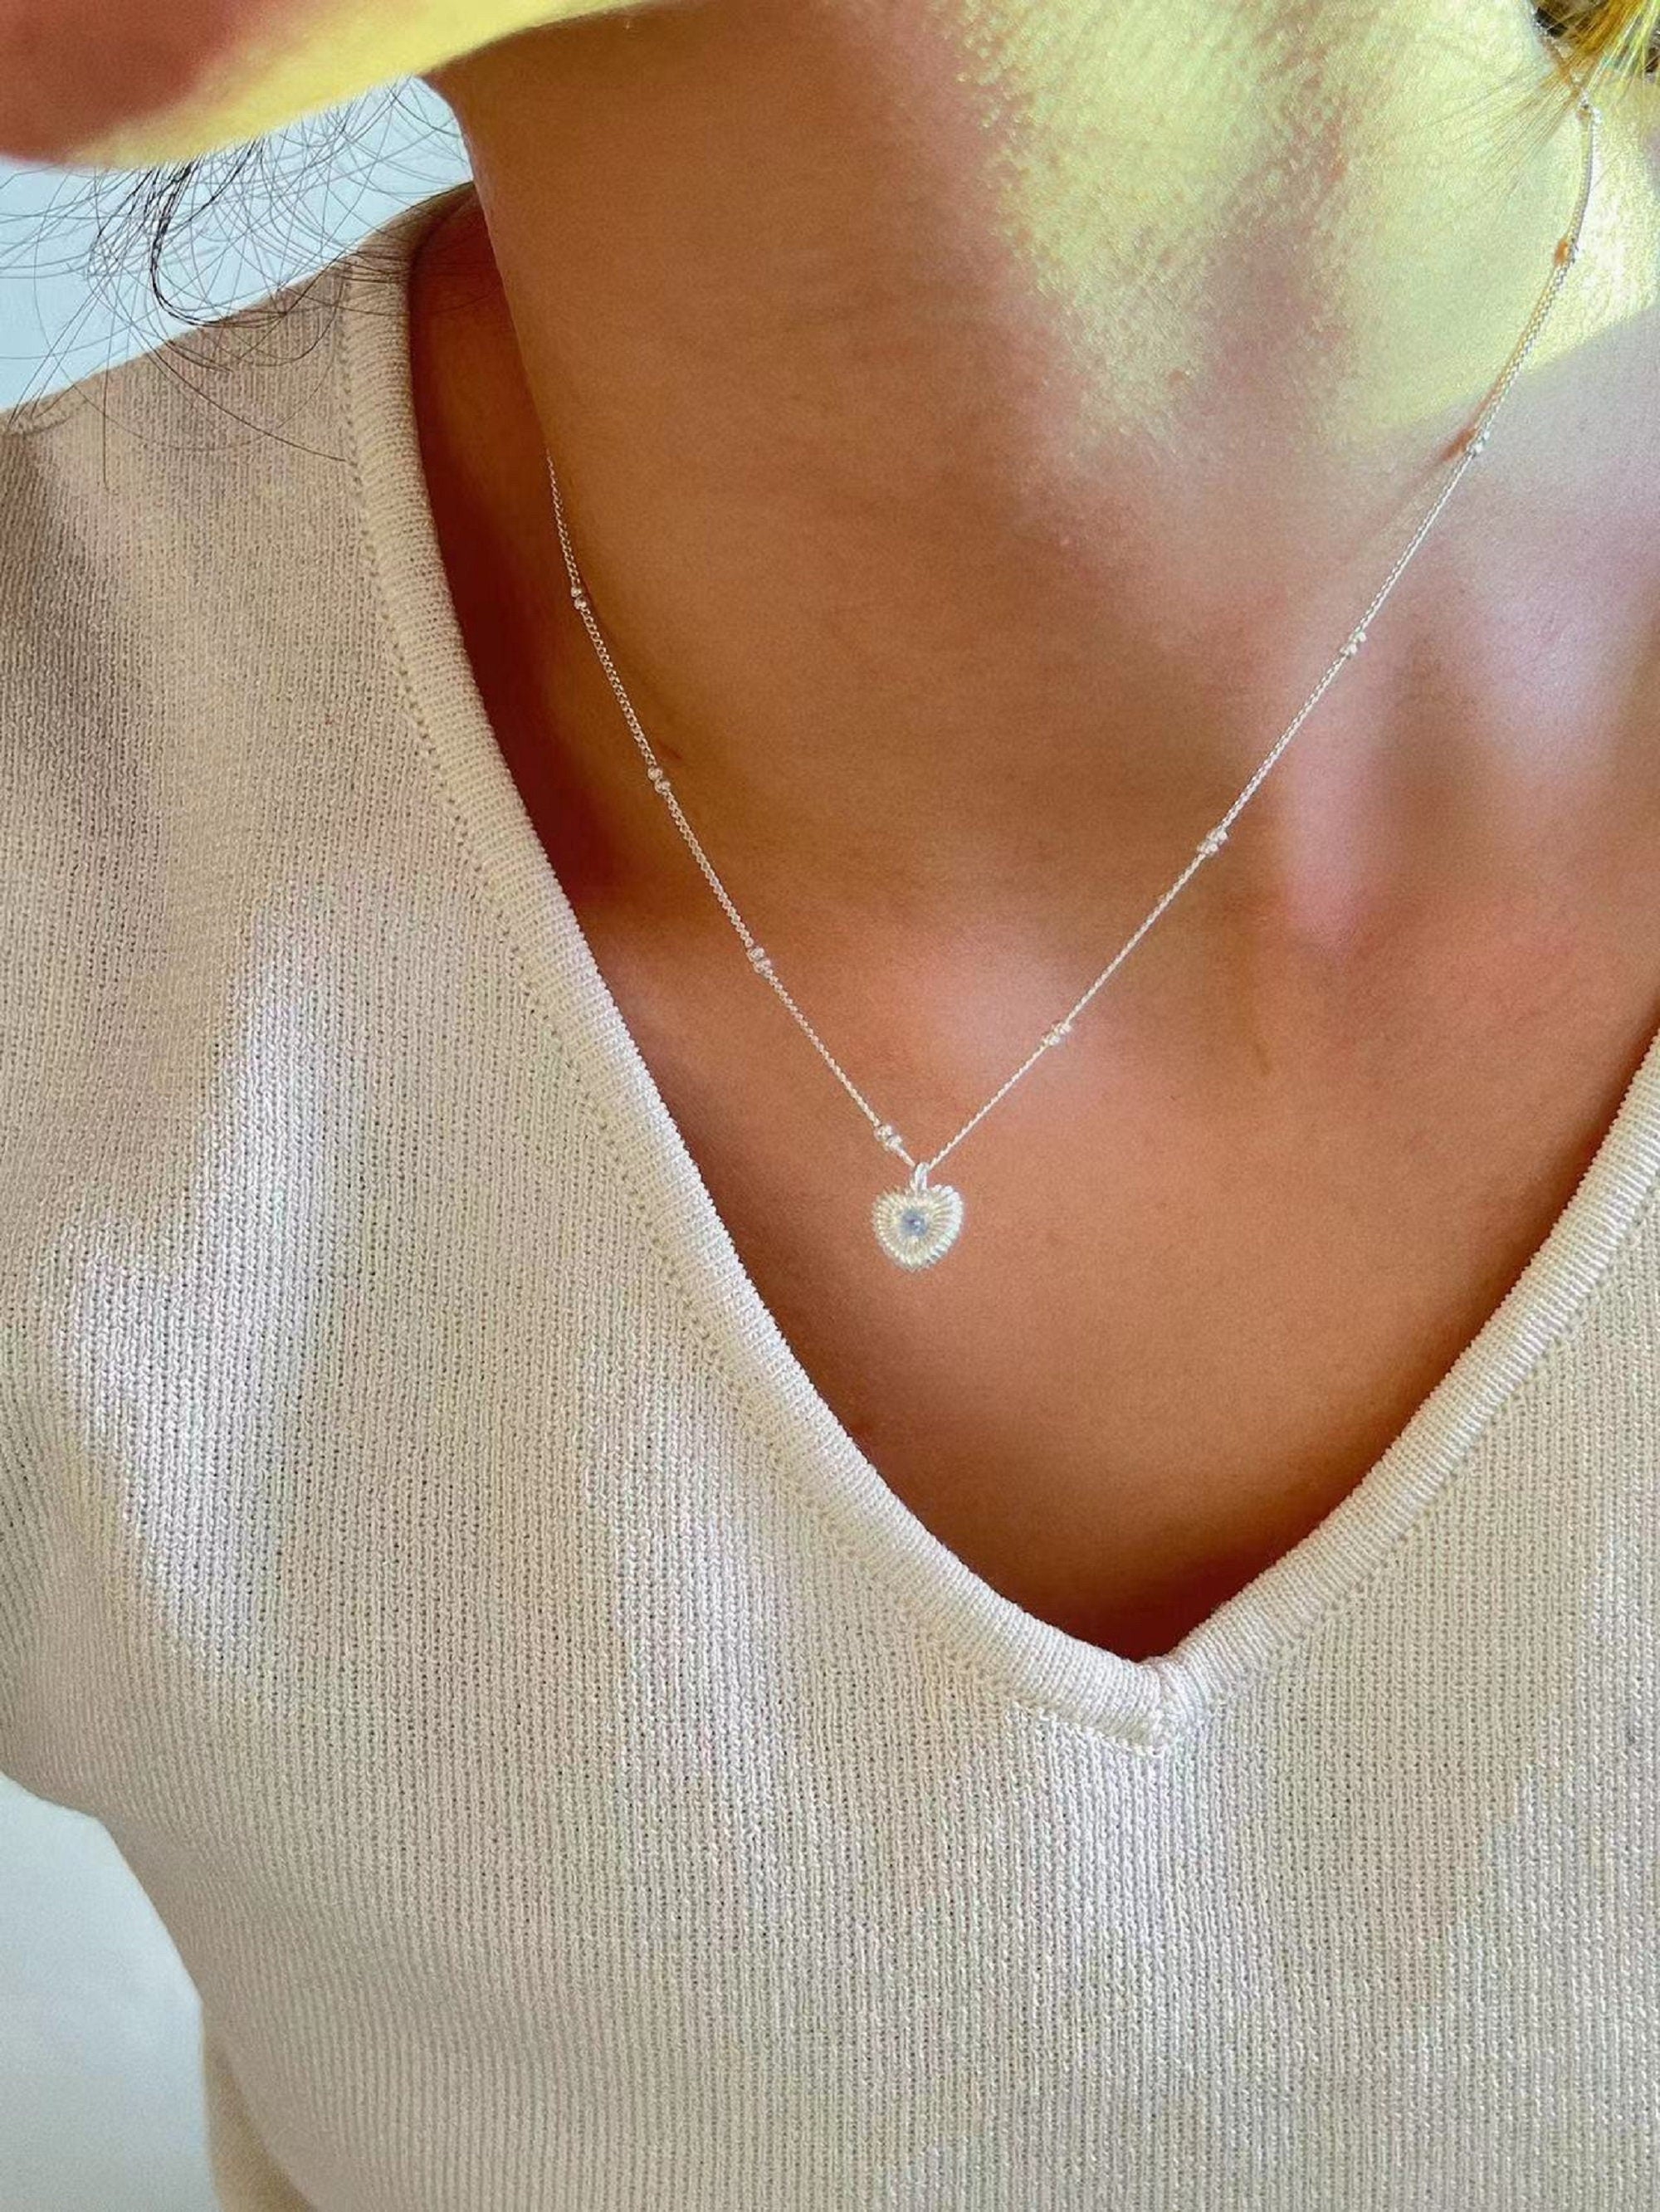 MAKARA SILVER SET | Small earrings, Silver pendant necklace, Silver